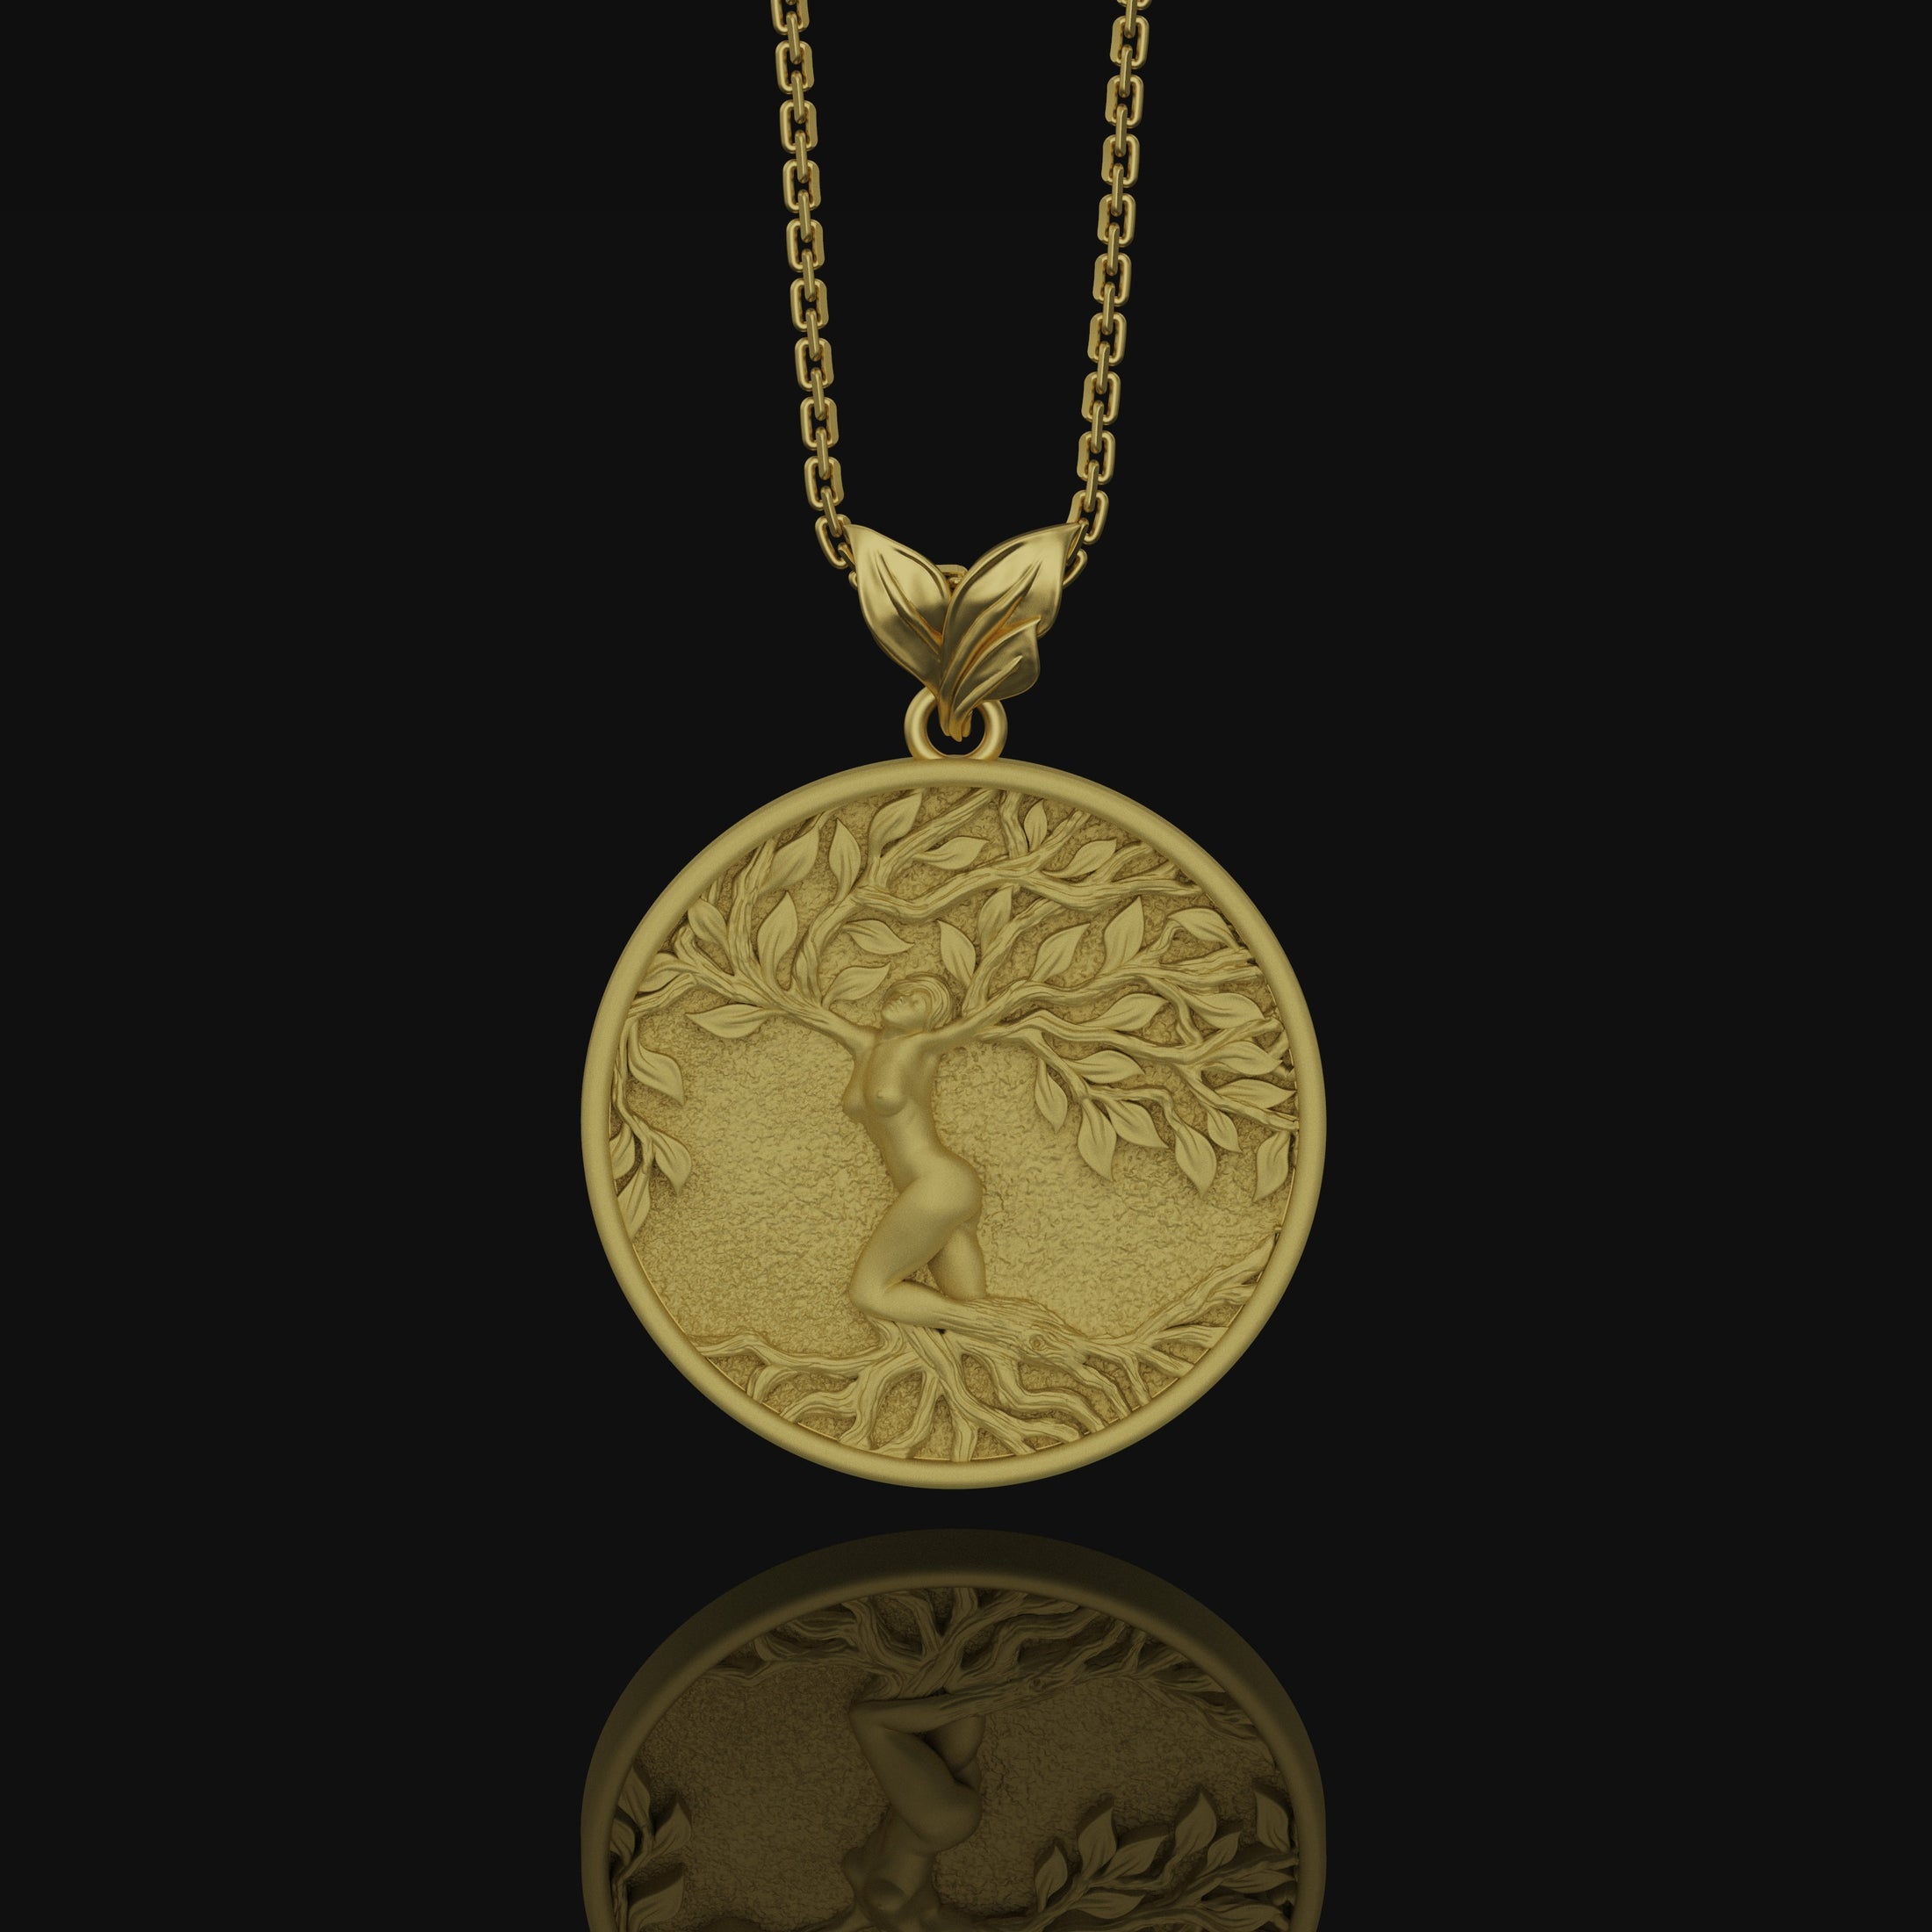 Yggdrasil Tree Of Life Pendant, Norse Mythology Gift, Vikings Asgard, Norse Mythology, Norse Pagan Necklace, Celtic World Tree Gold Matte